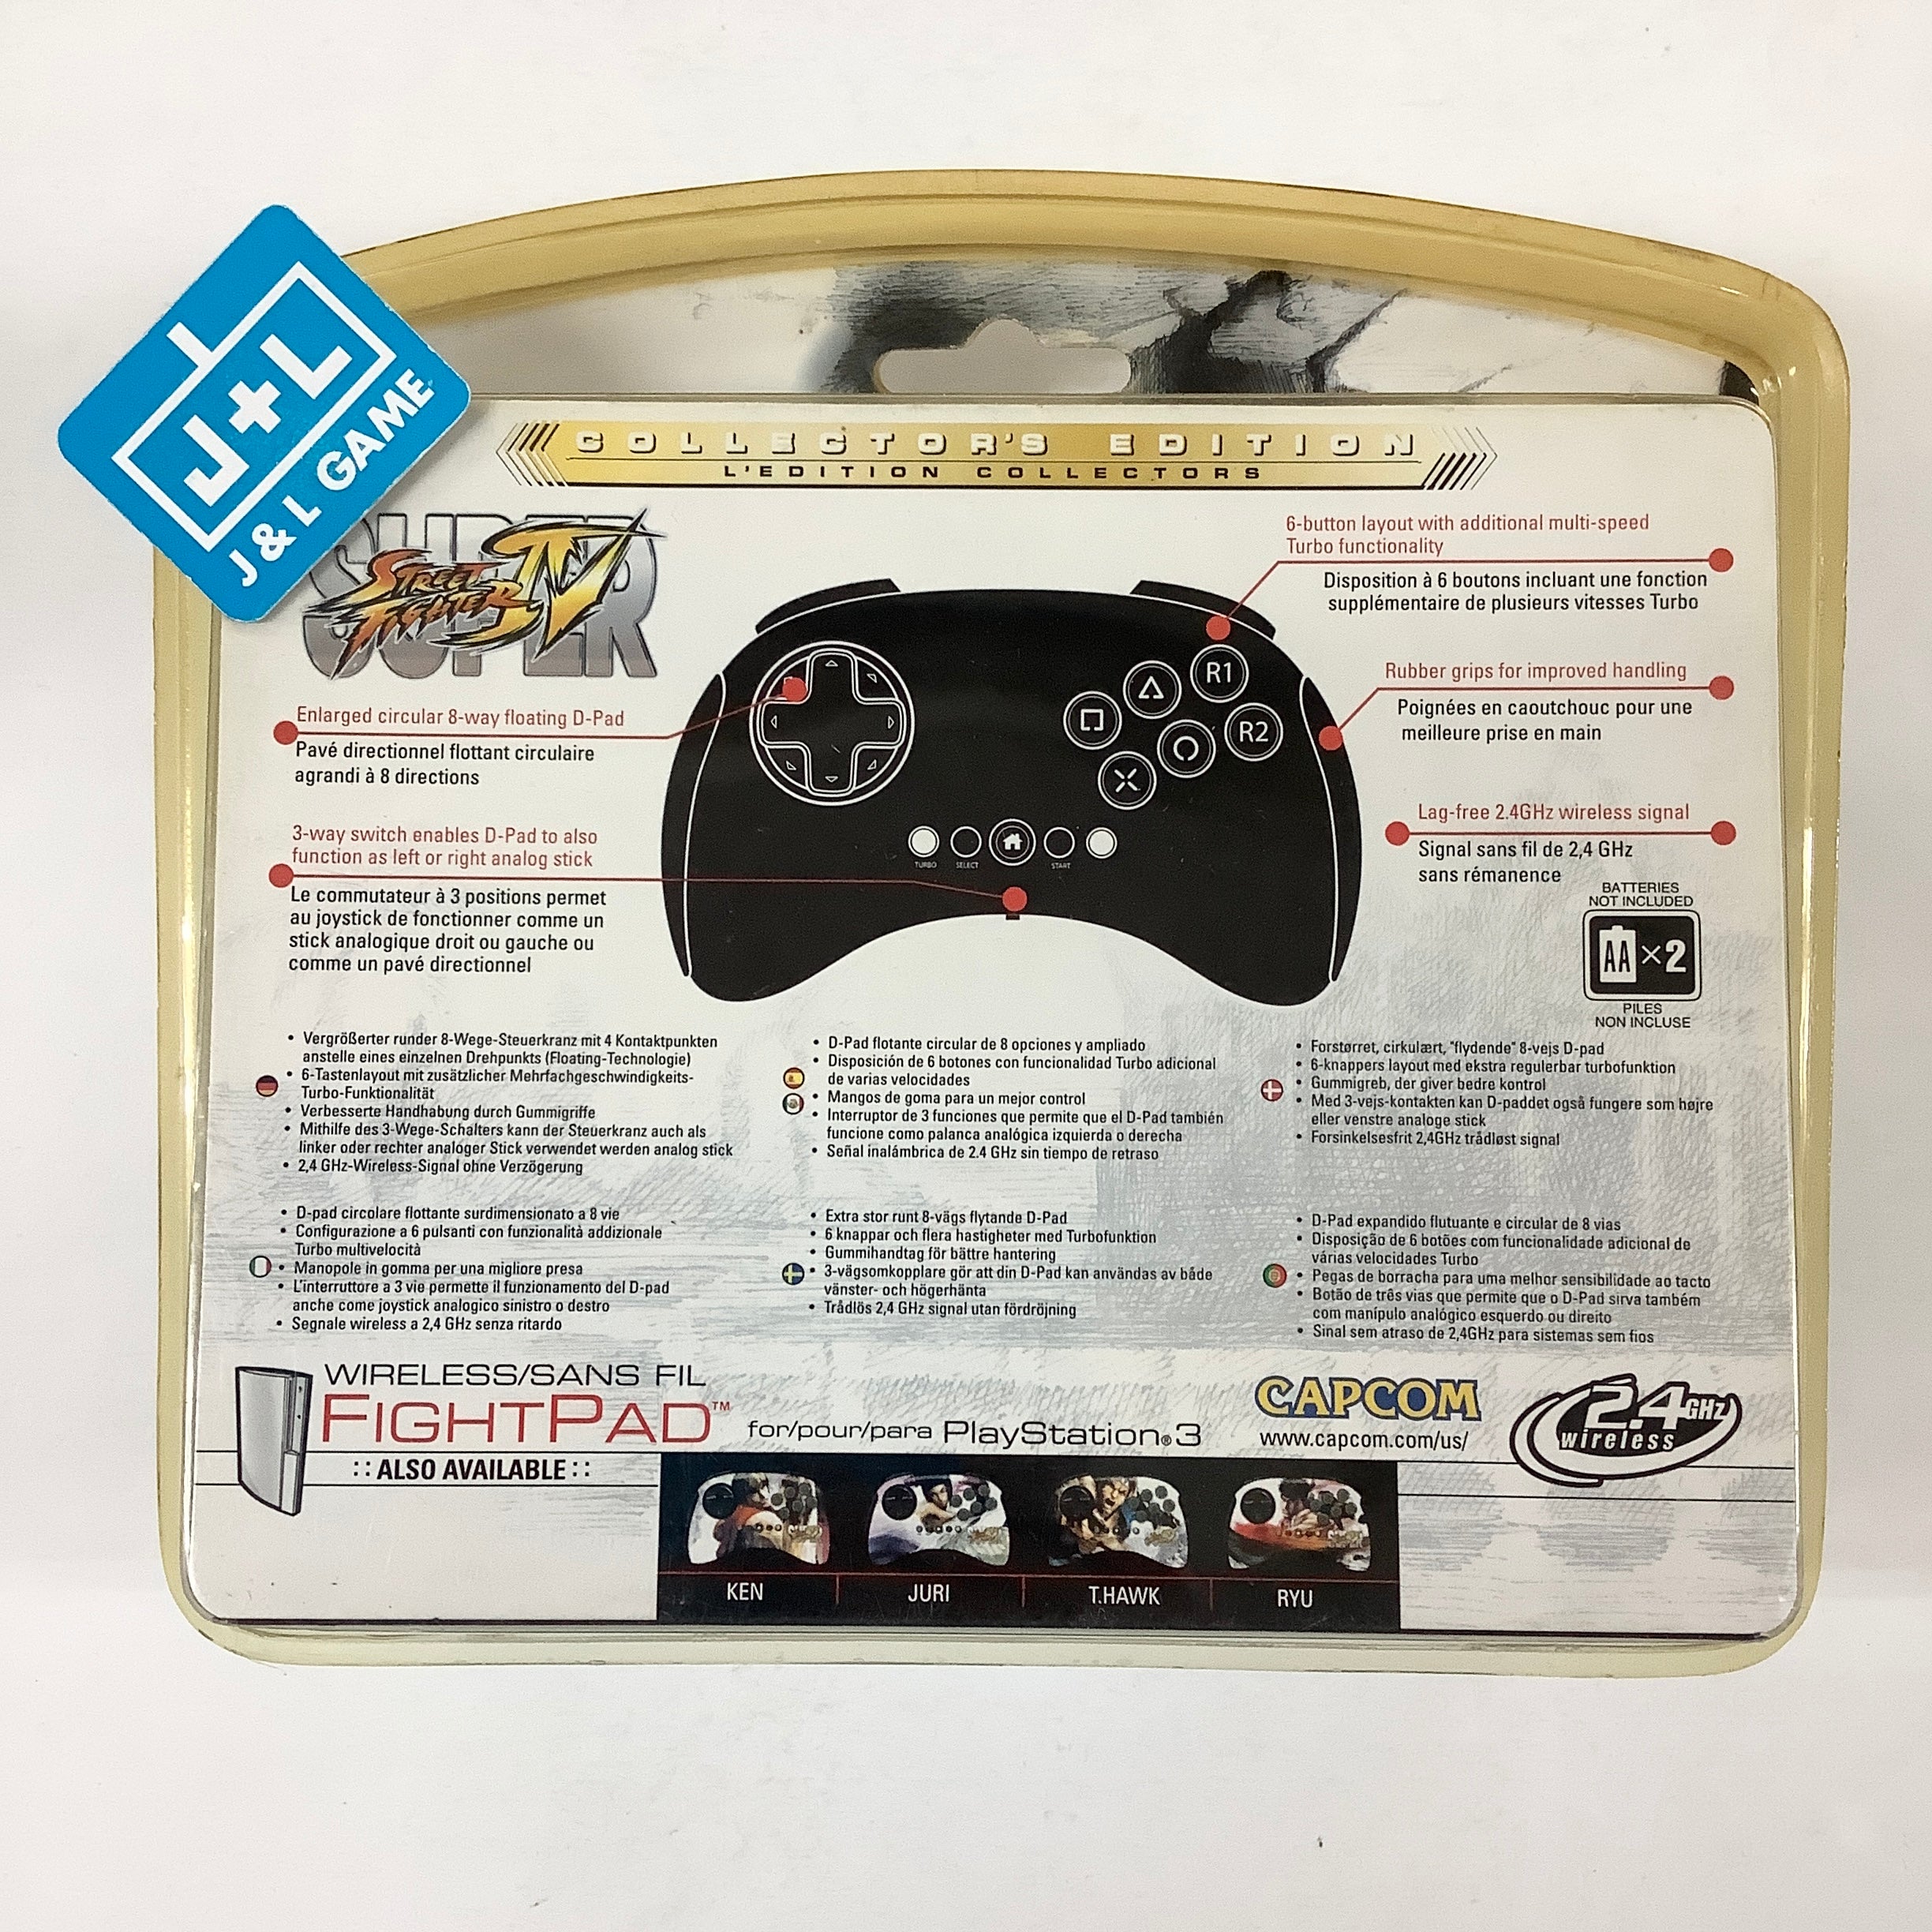 Mad Catz Playstation 3 Super Street Fighter IV Wireless FightPad (T. Hawk)  - (PS3) Playstation 3